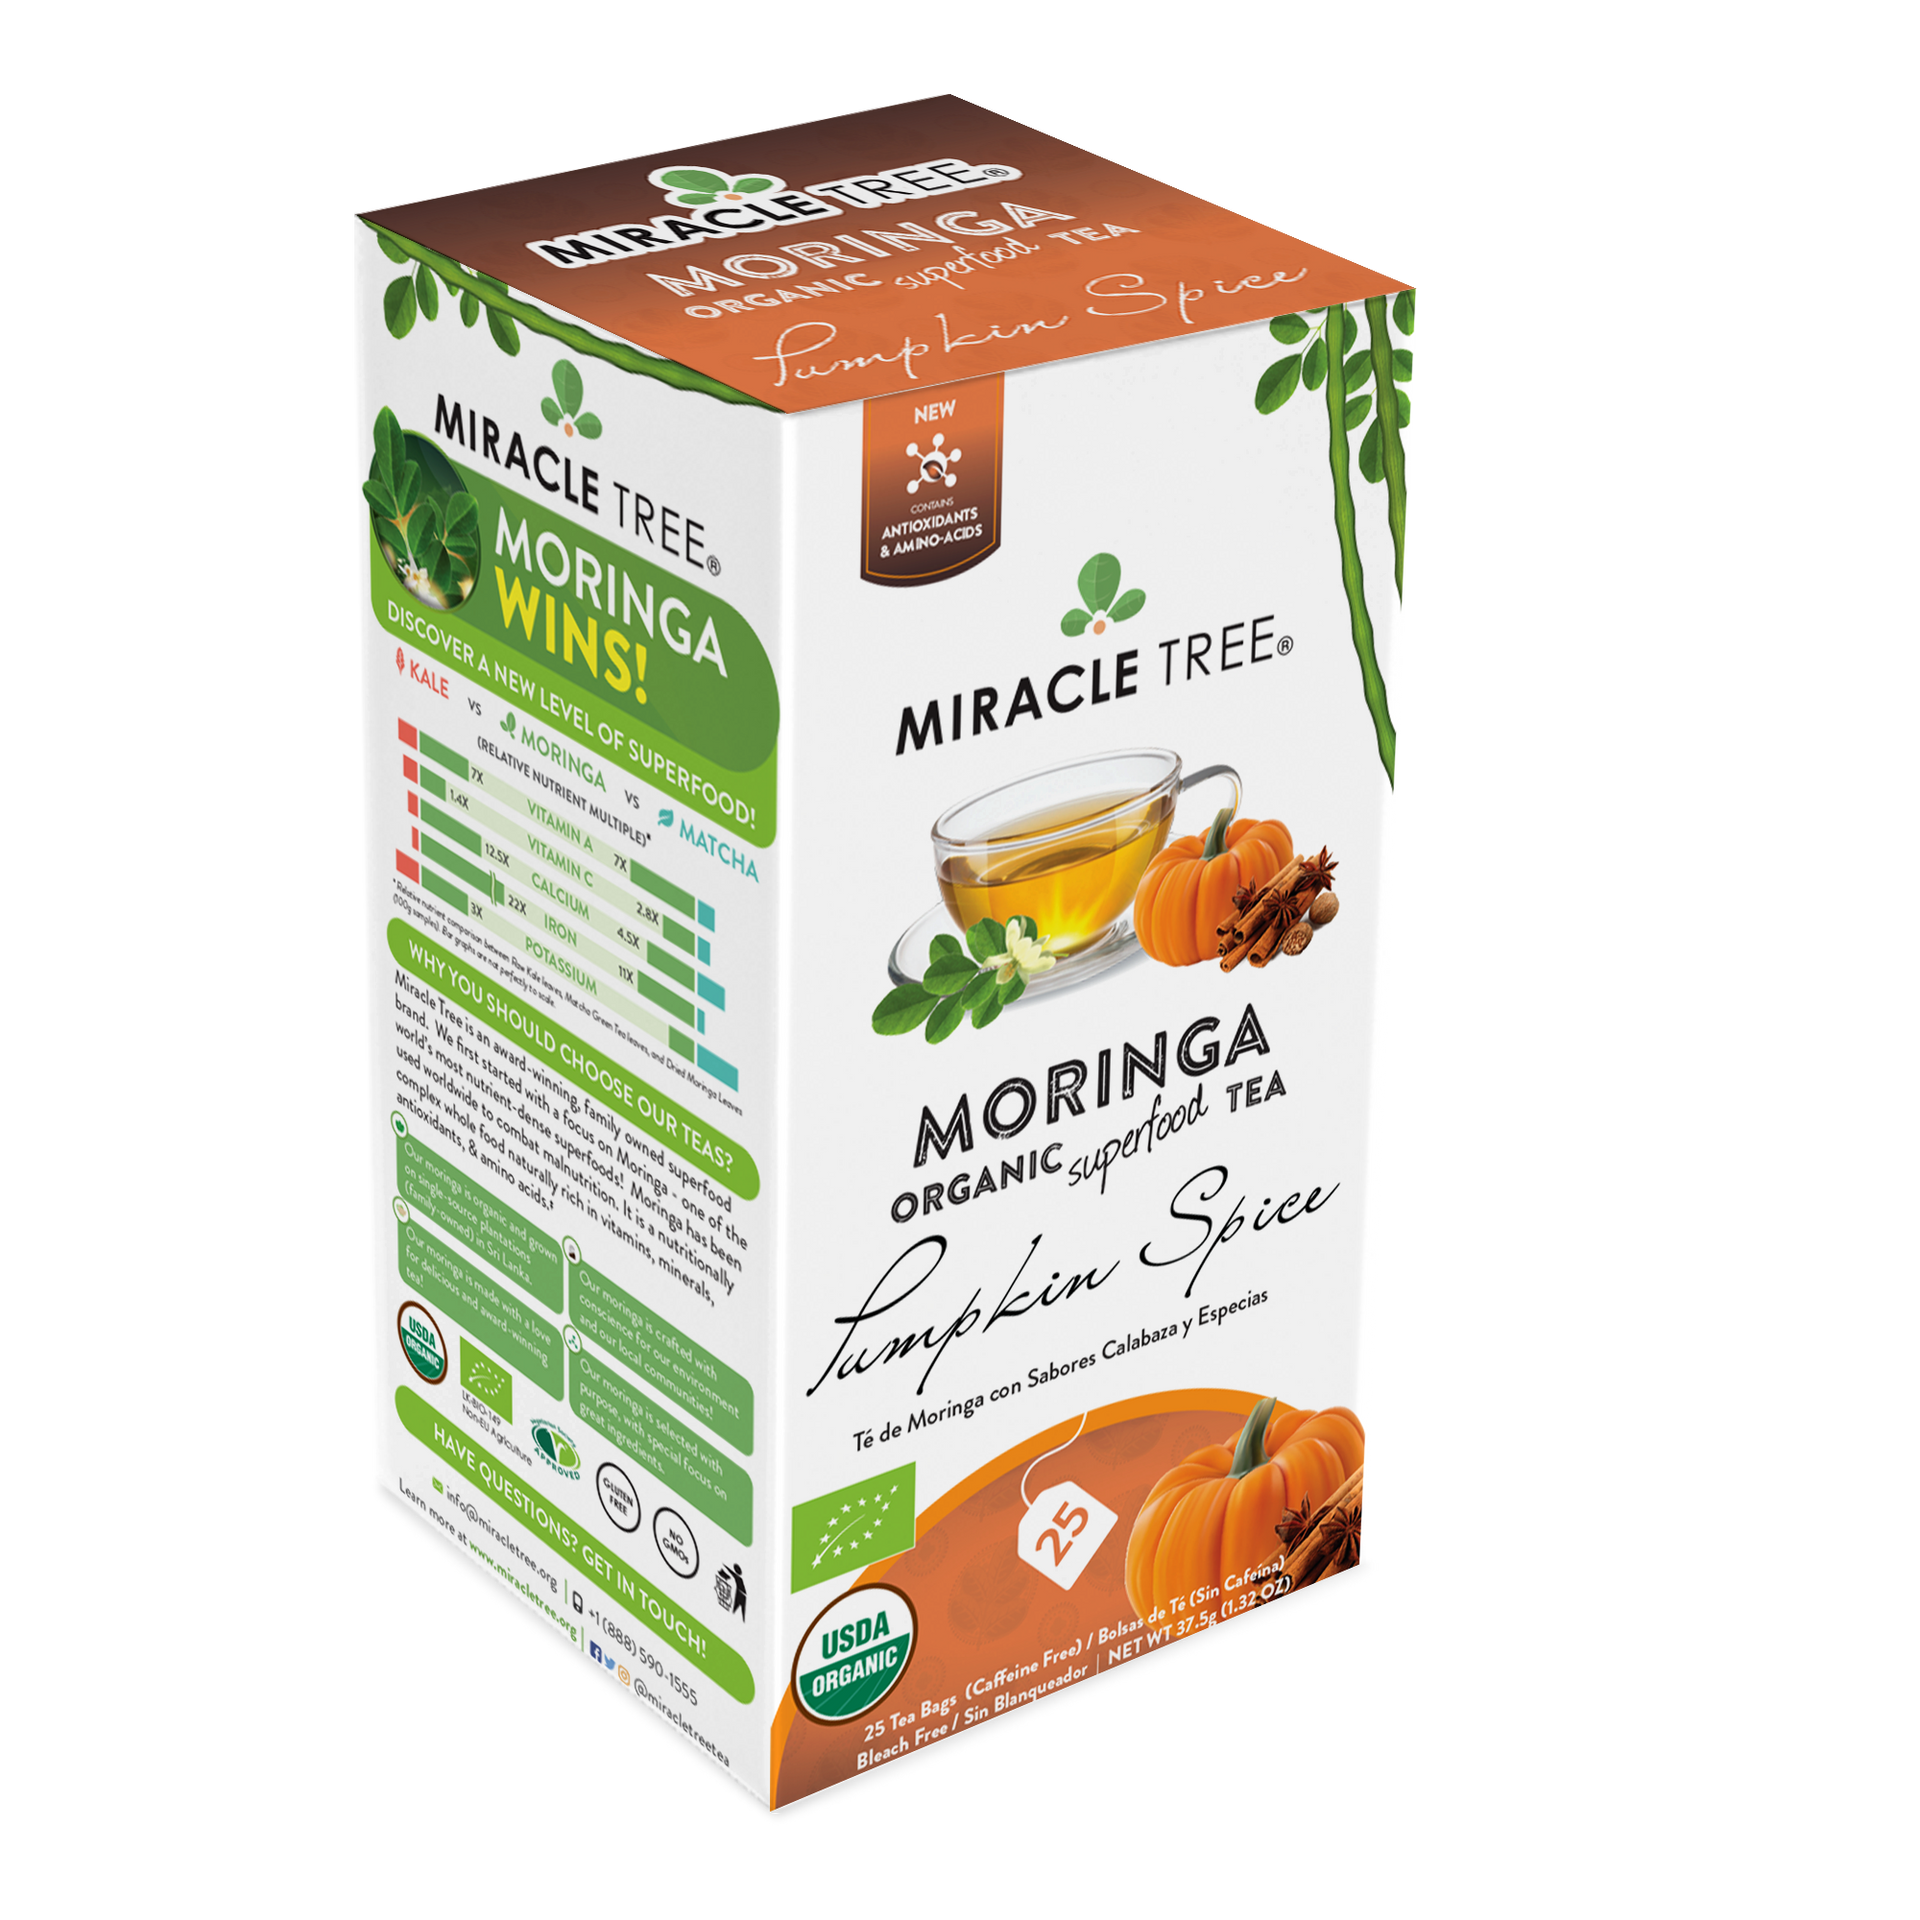 Miracle Tree's Organic Moringa Tea, Pumpkin Spice - Mercantile Mountain